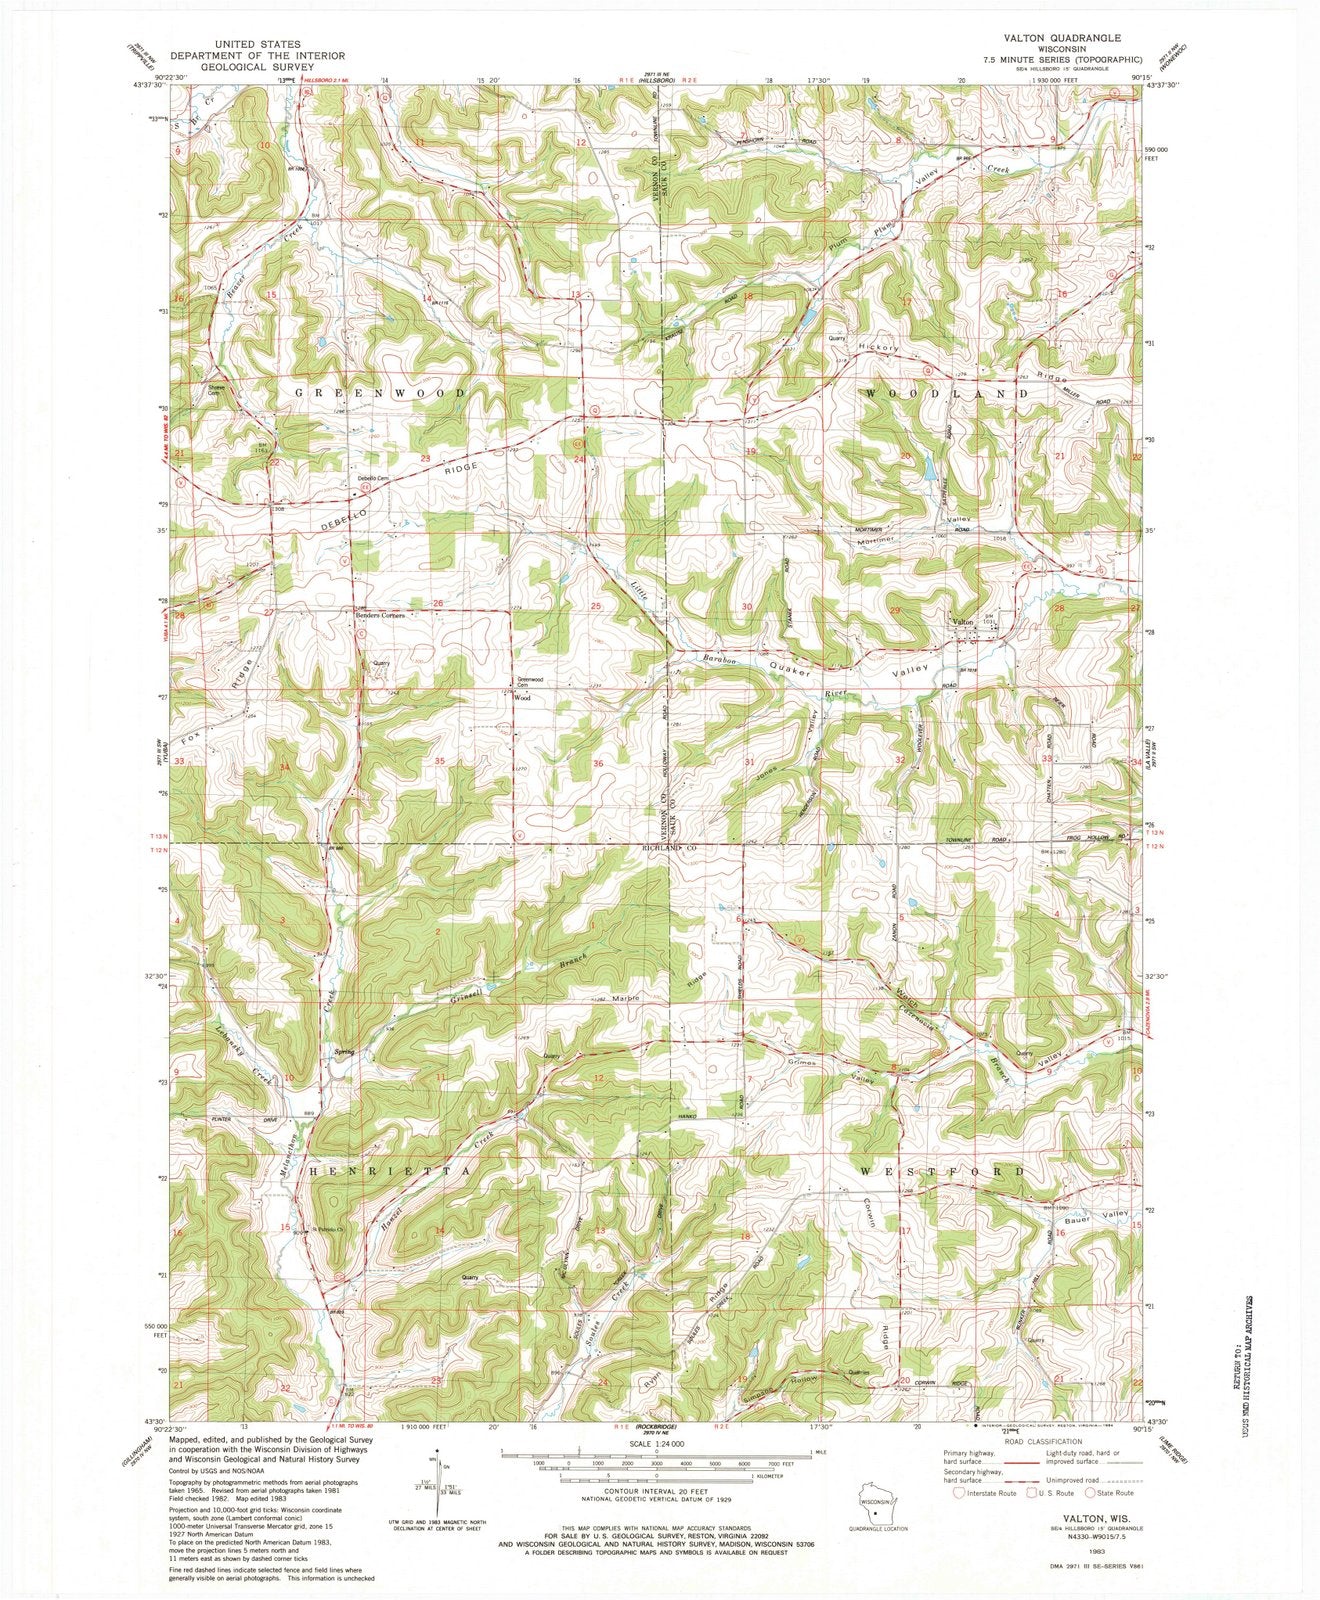 1983 Valton, WI - Wisconsin - USGS Topographic Map